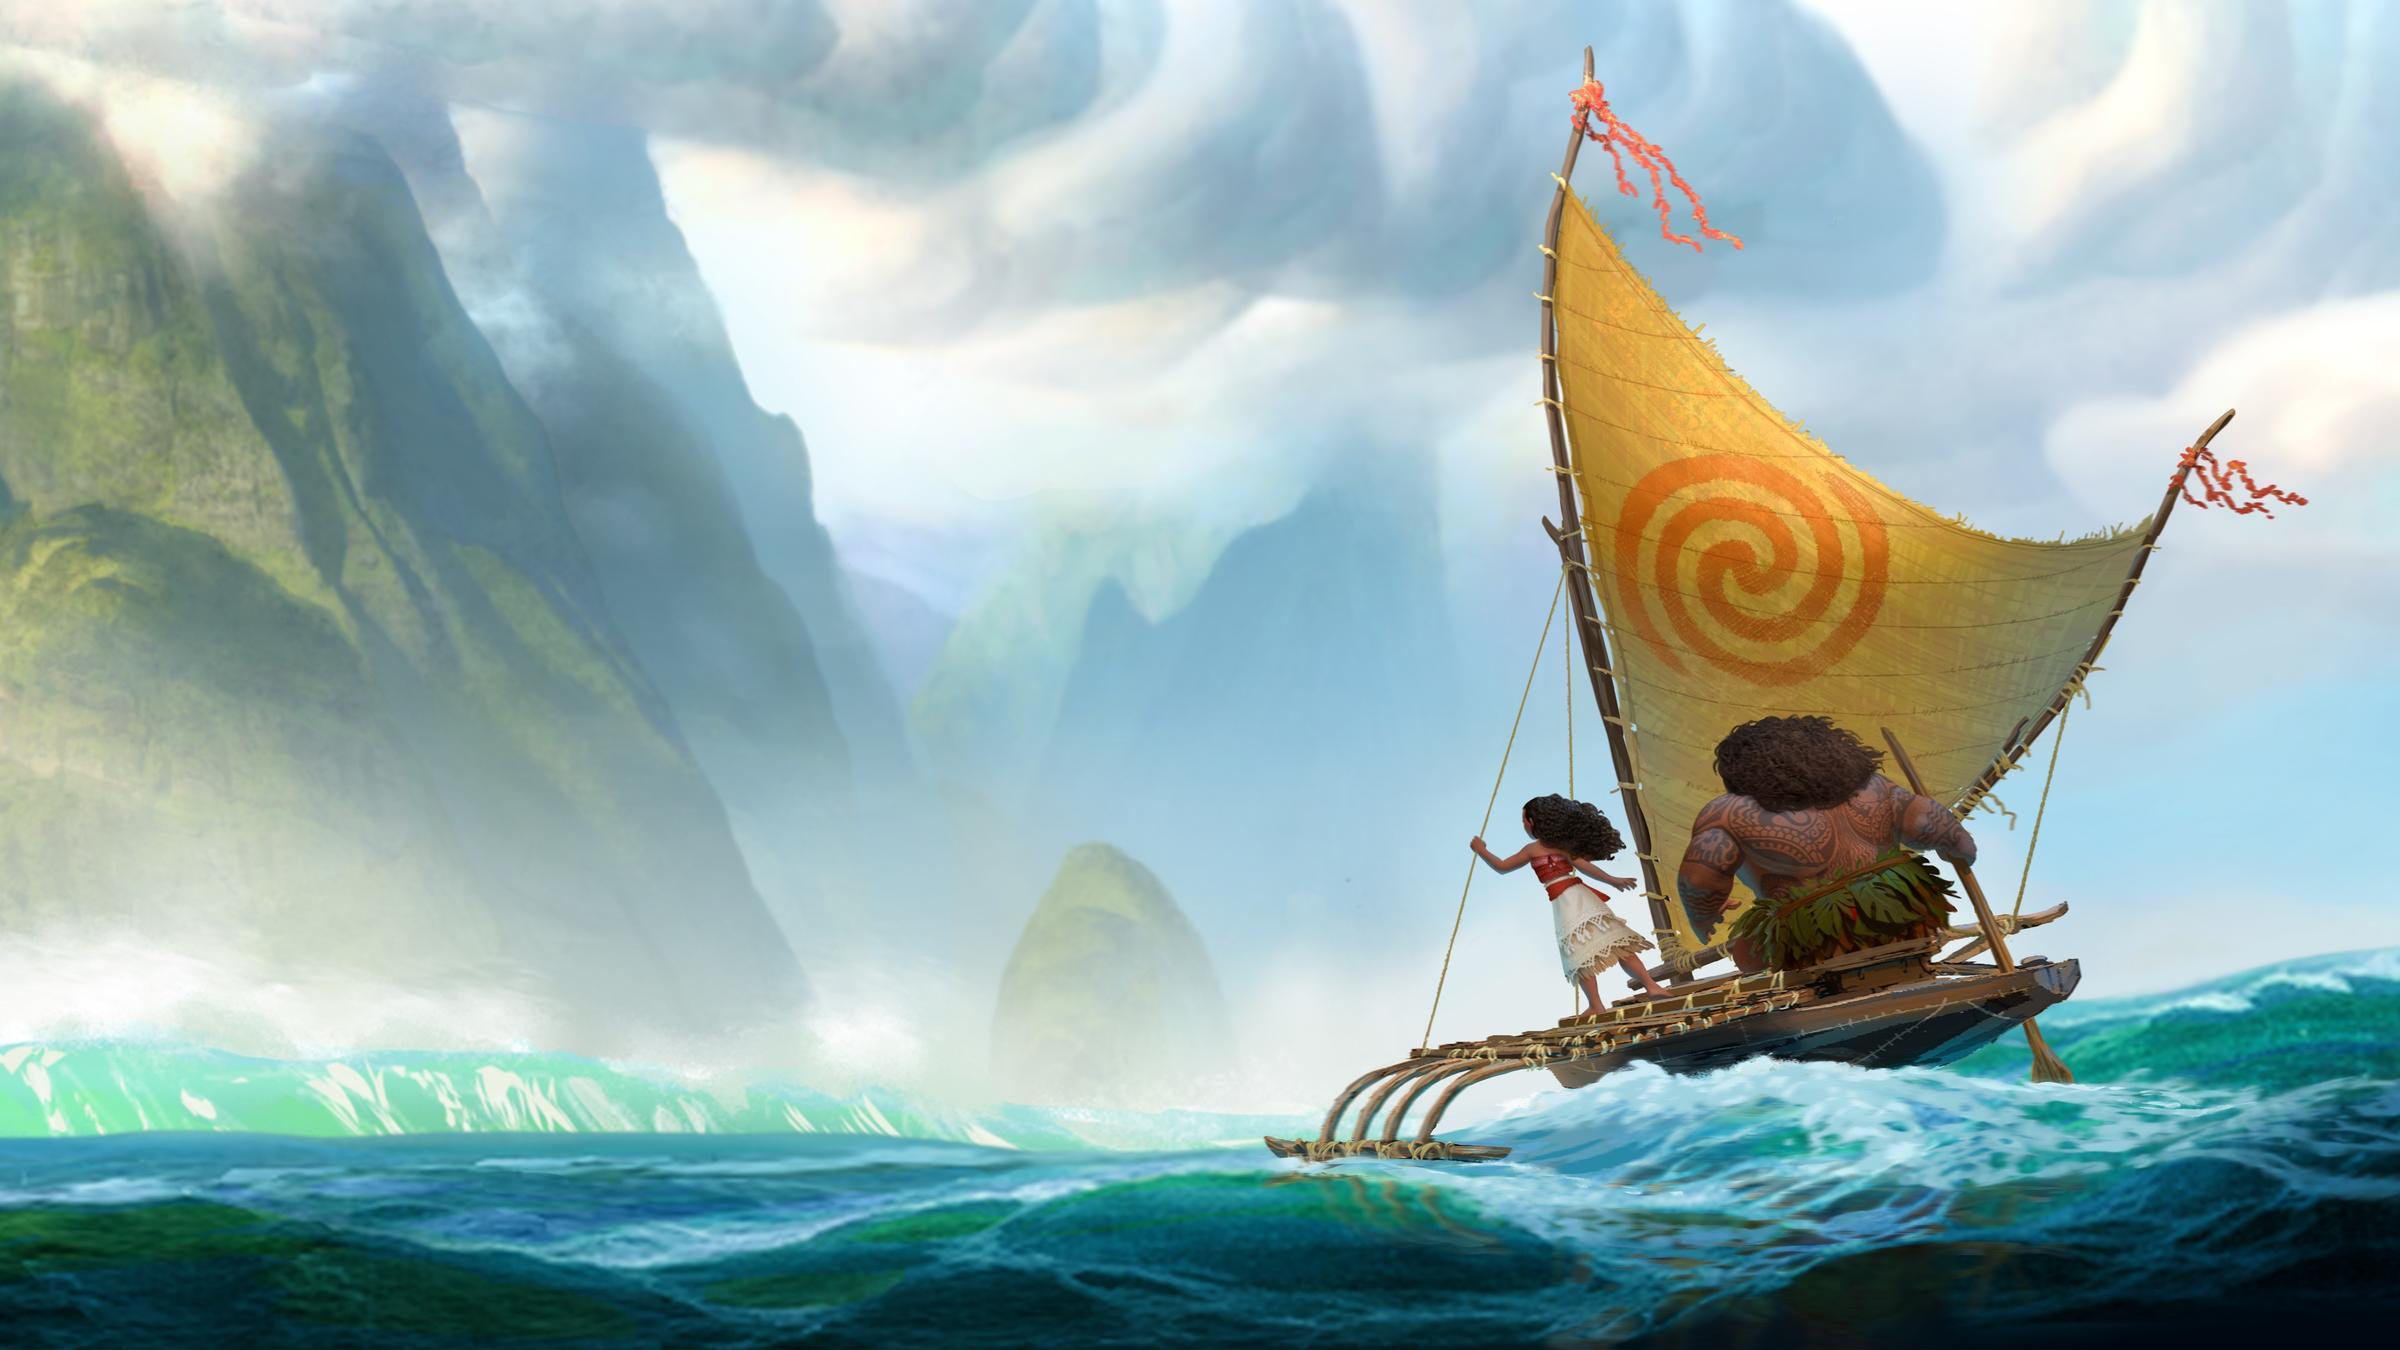 Disney's 'Moana' Needs No Prince, Just The Land And Sea